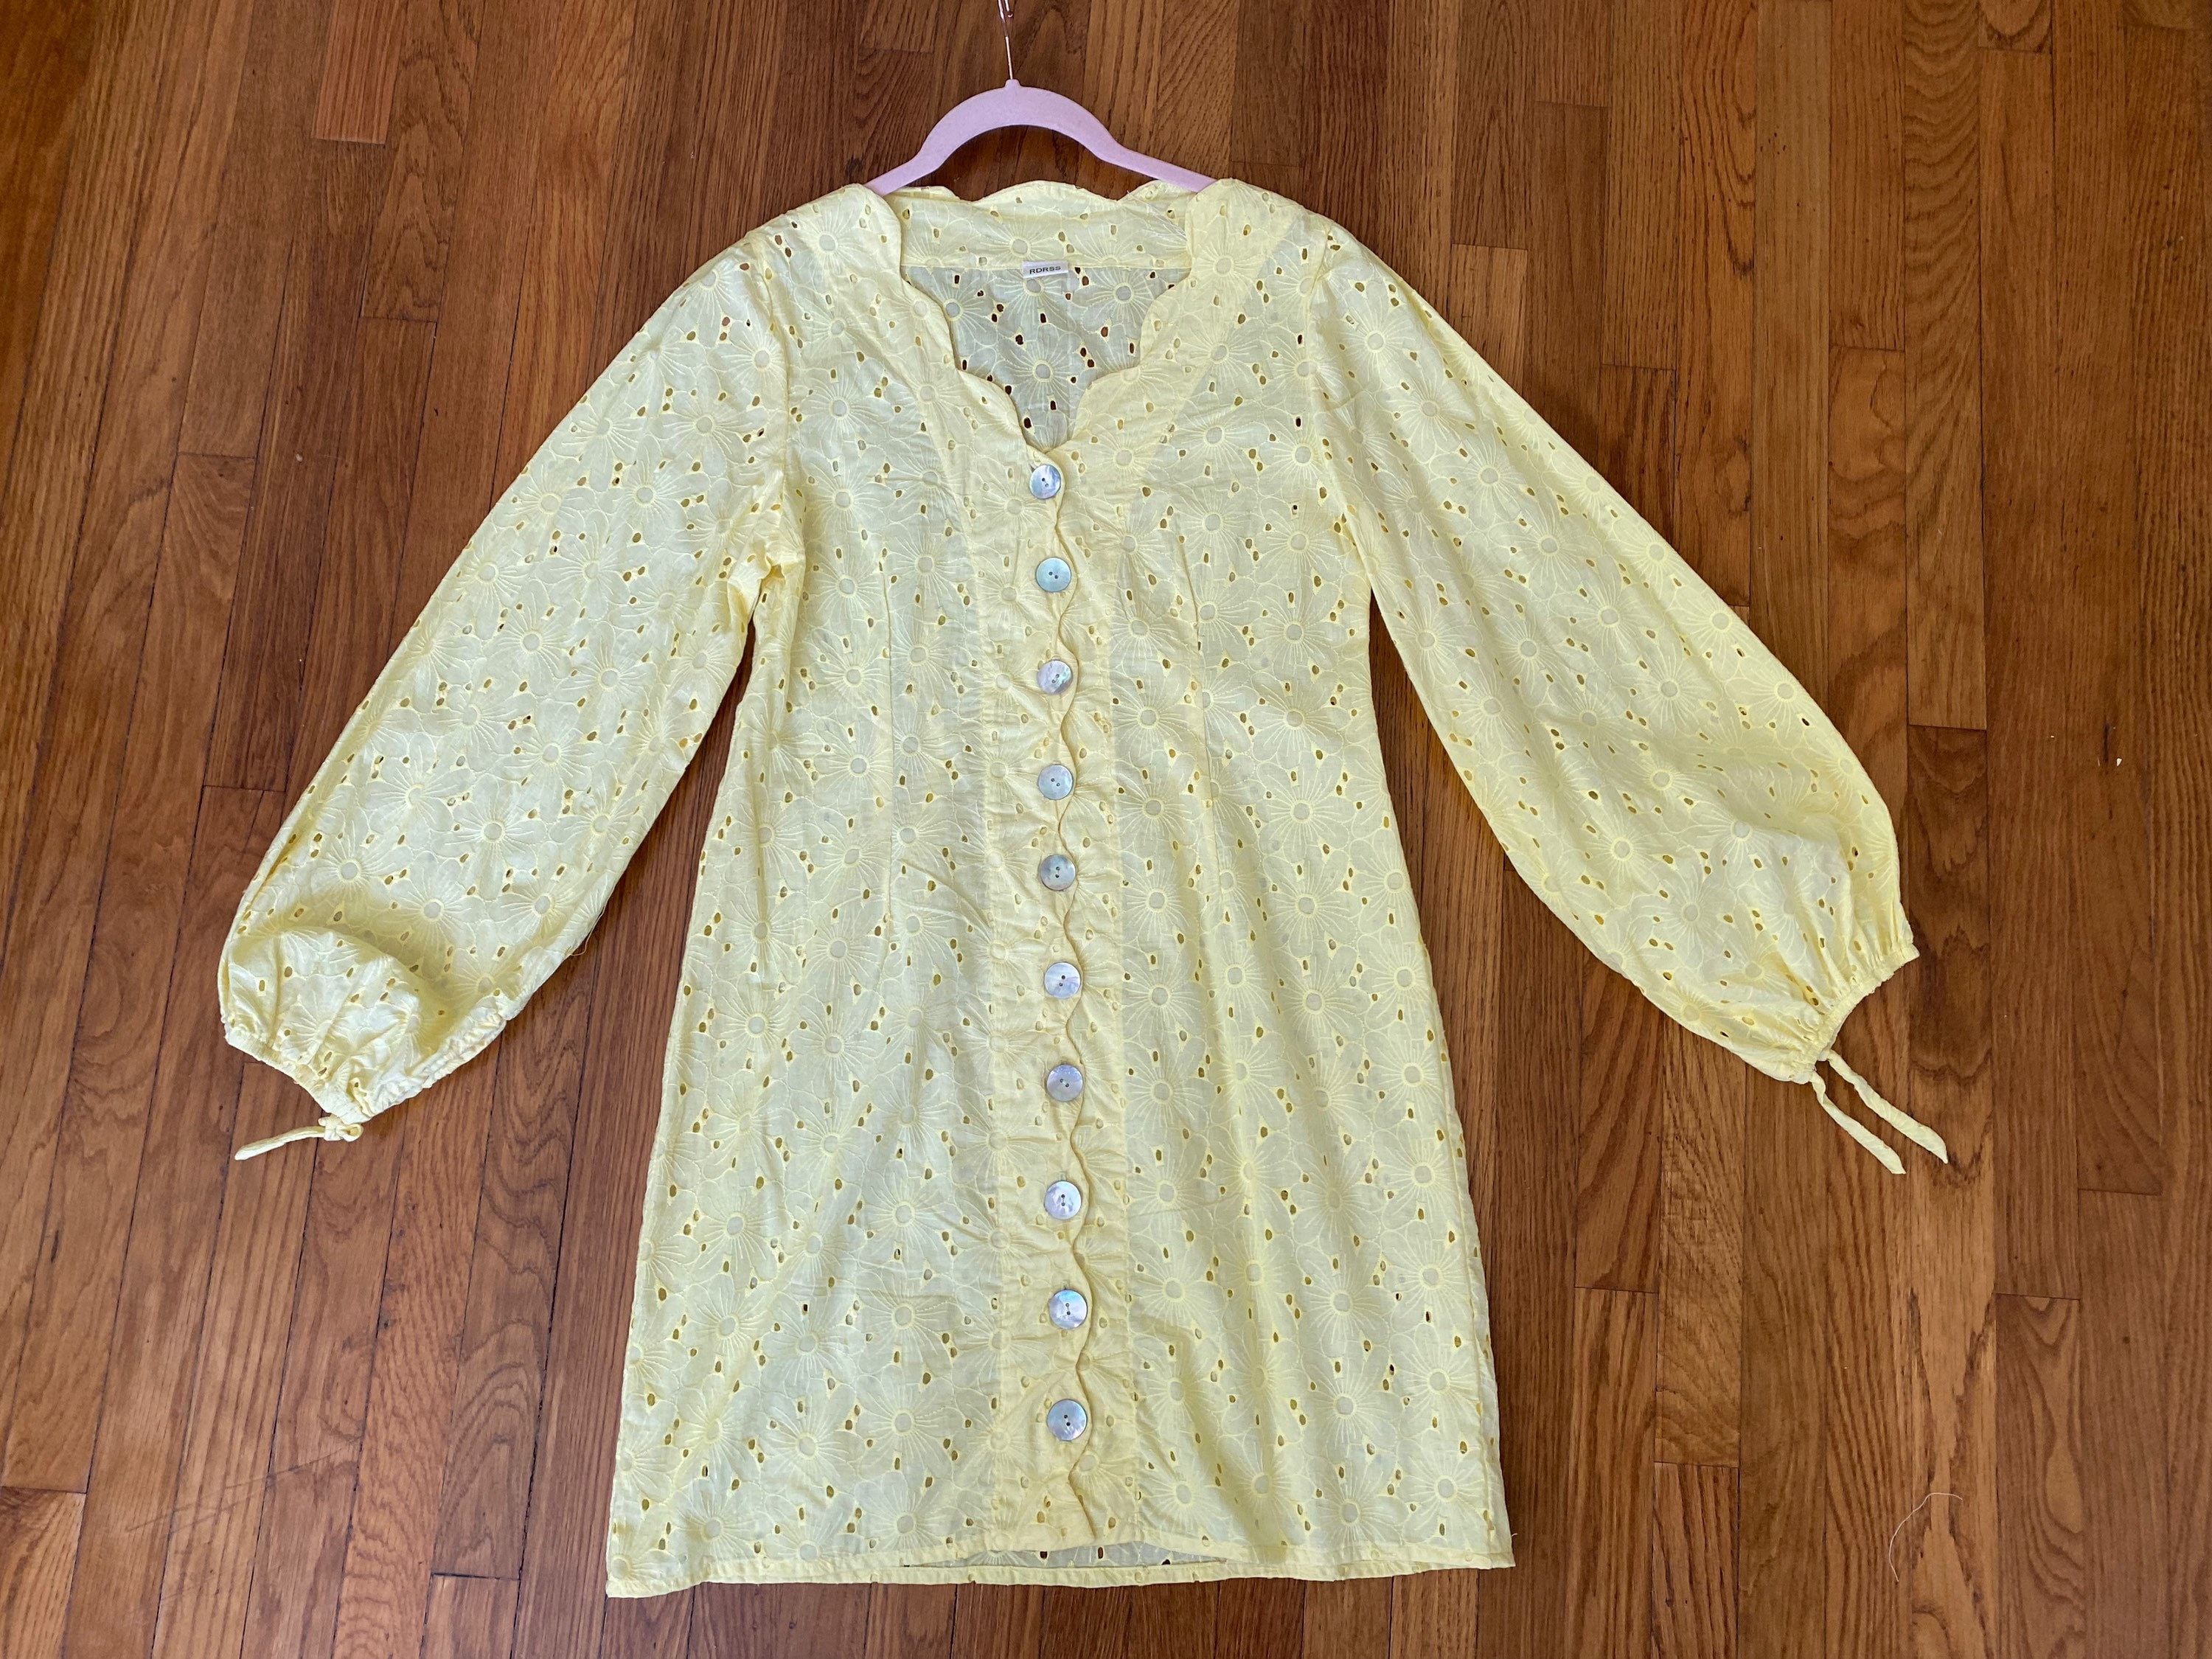 softestaura — Jane Birkin's “darling” embroidered dress